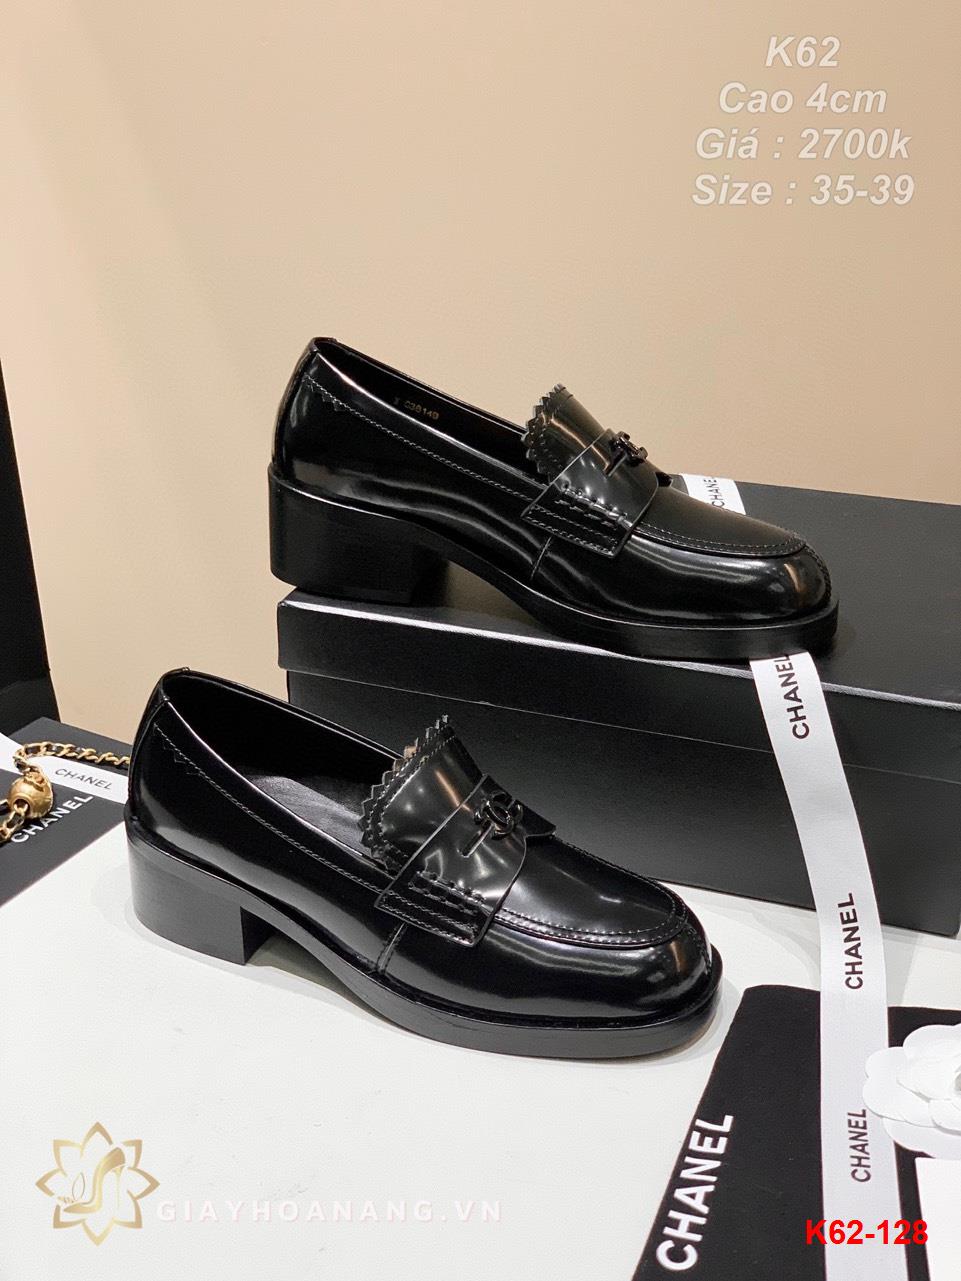 K62-128 Chanel giày cao 4cm siêu cấp